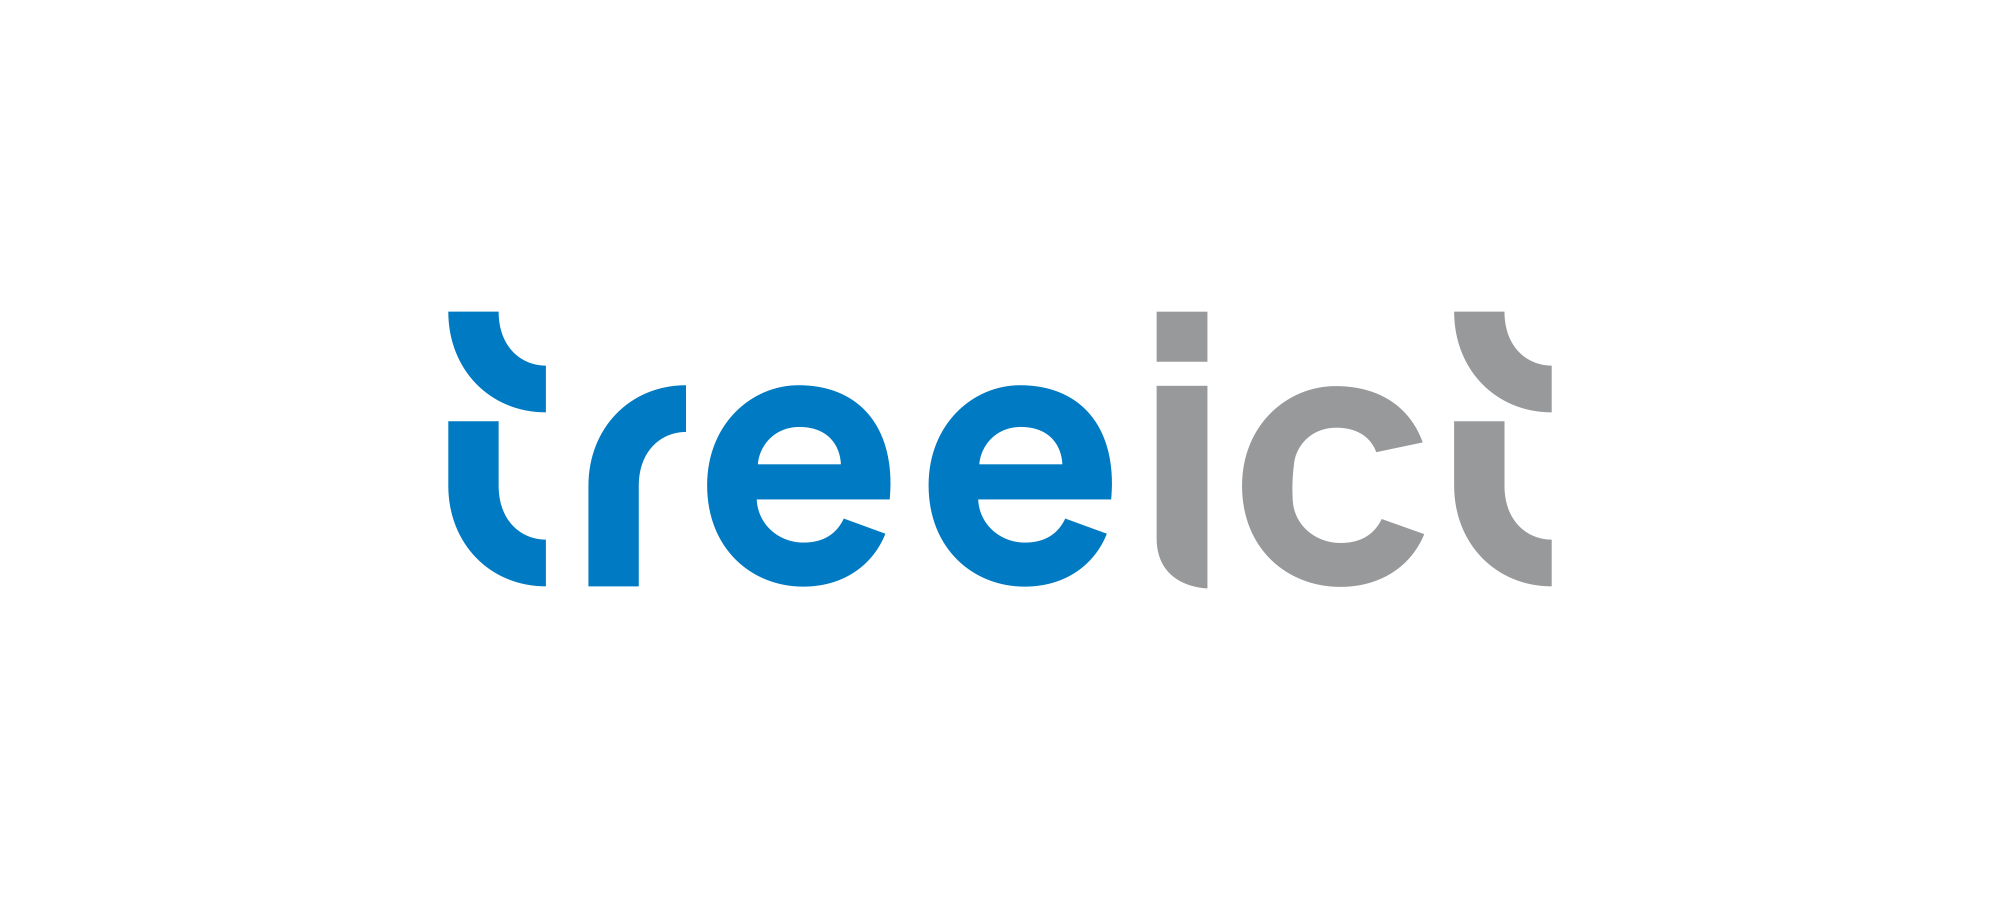 Logo TreeICT pay off RGB